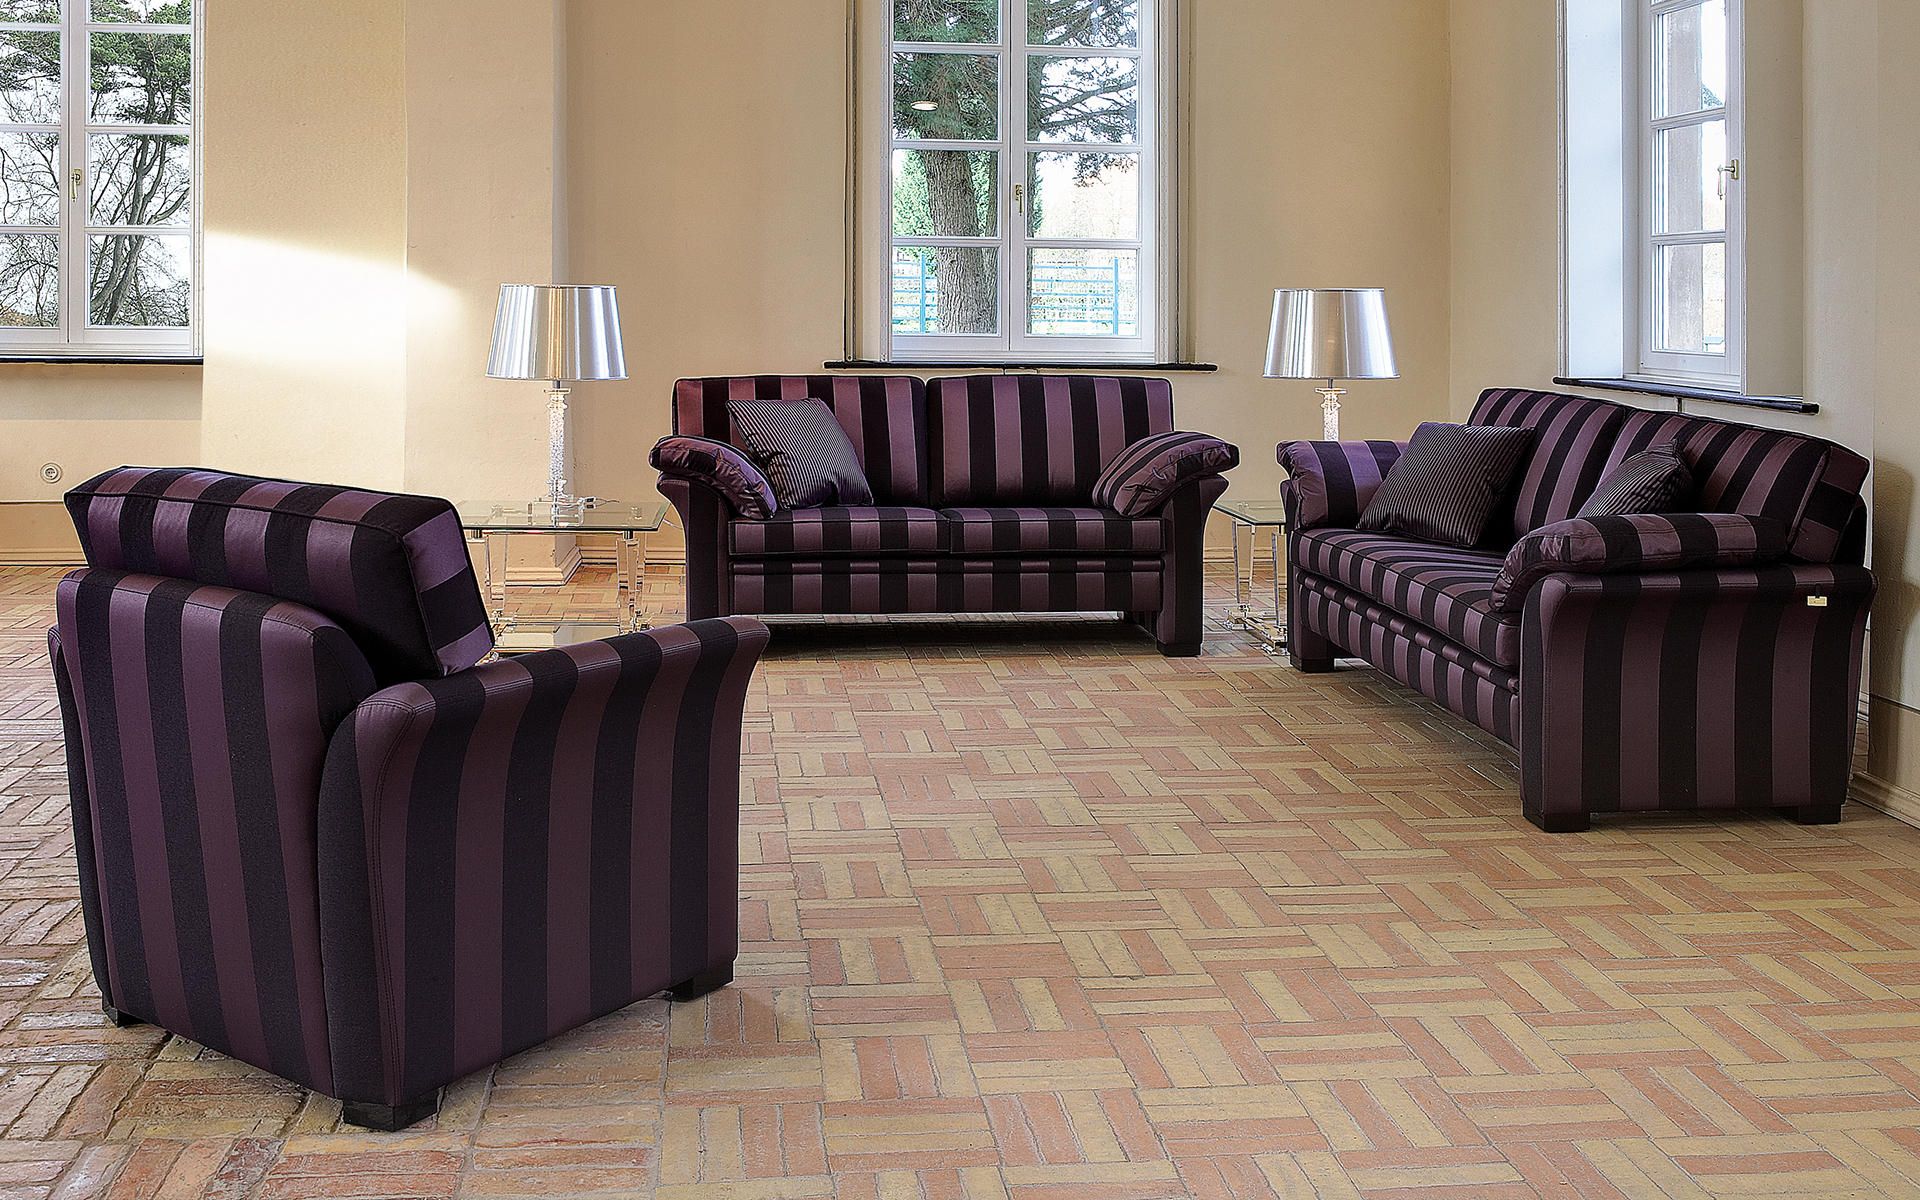 Amazing Benefits Of Custom Made Upholstered Furniture In Dubai